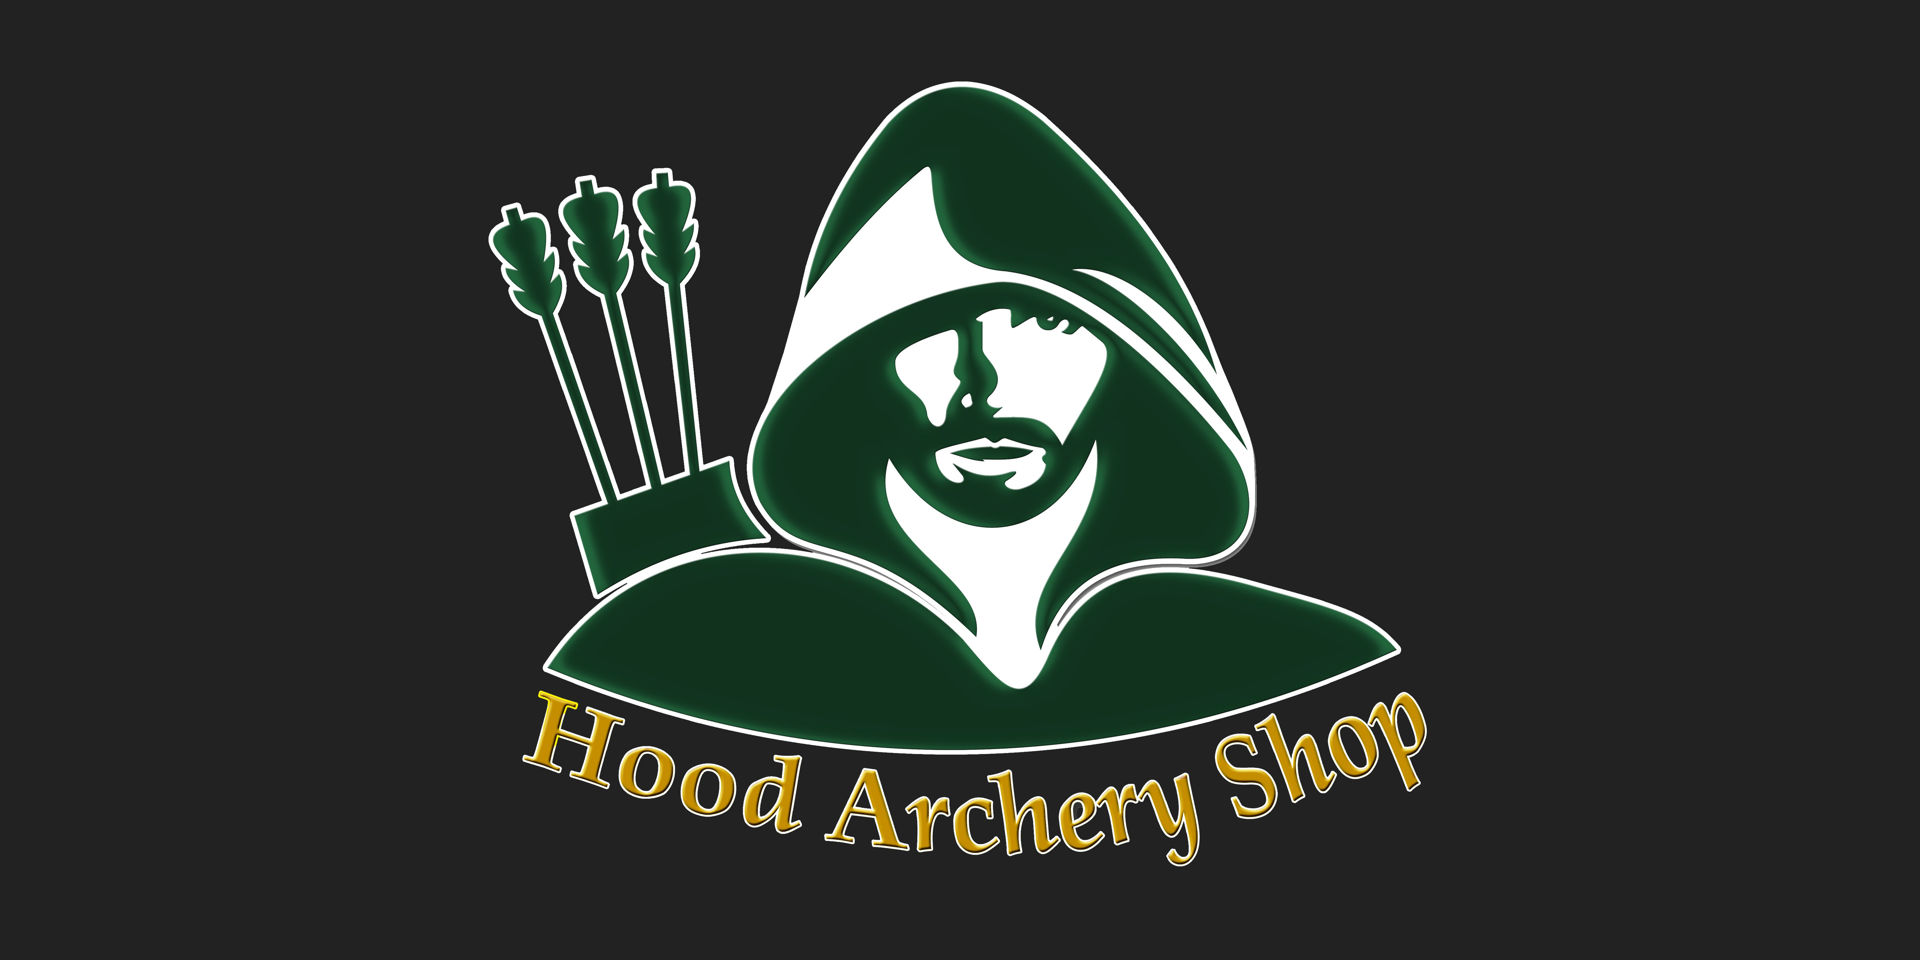 Hood Archery Shop Archery Supplies Halloween Costume Cosplay